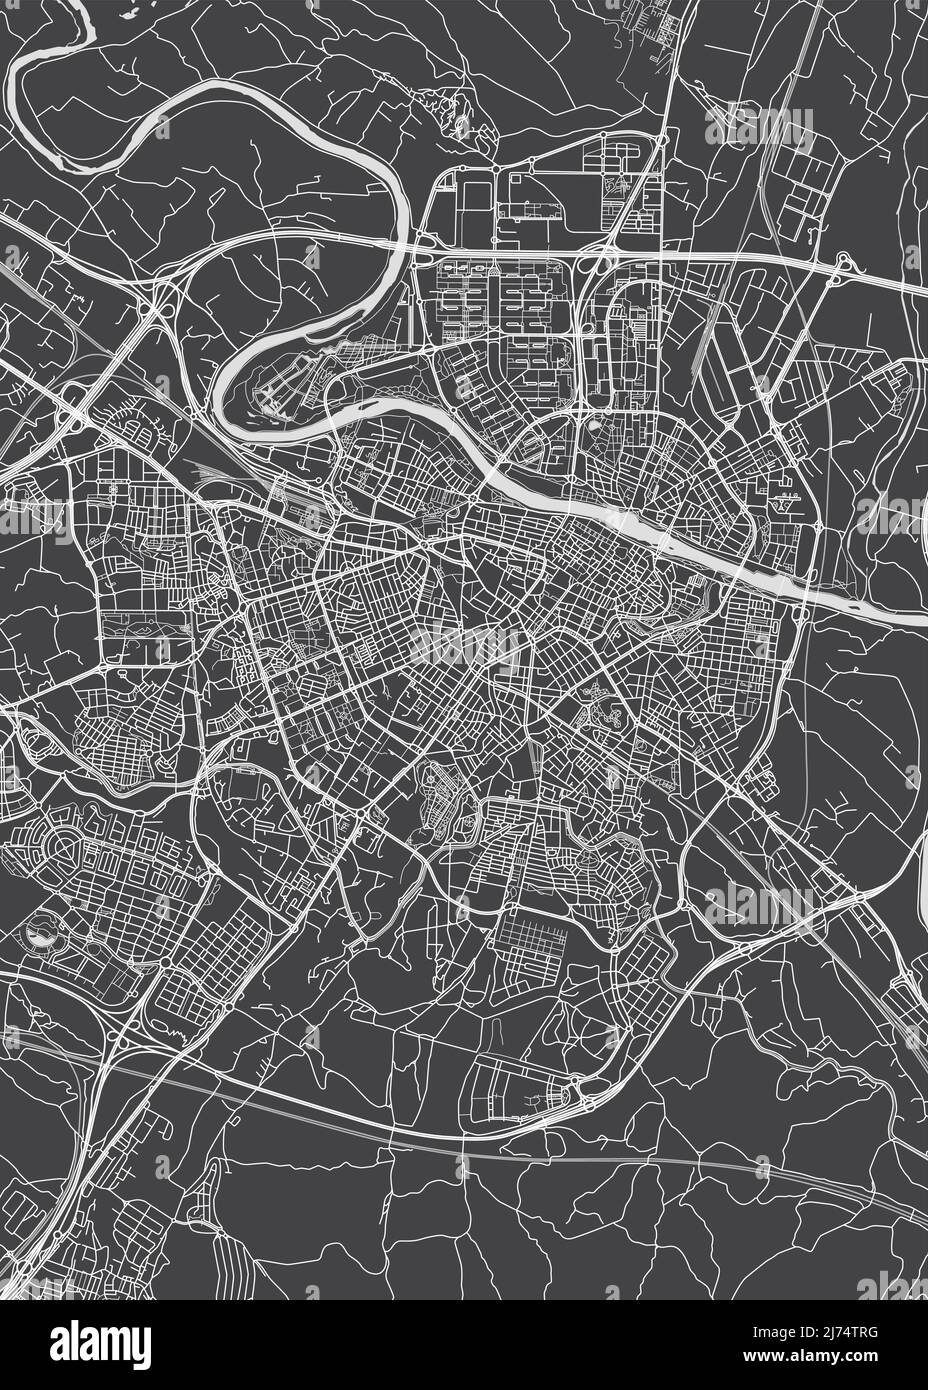 Stadtplan Zaragoza, monochromer Detailplan, Vektorgrafik Stock Vektor